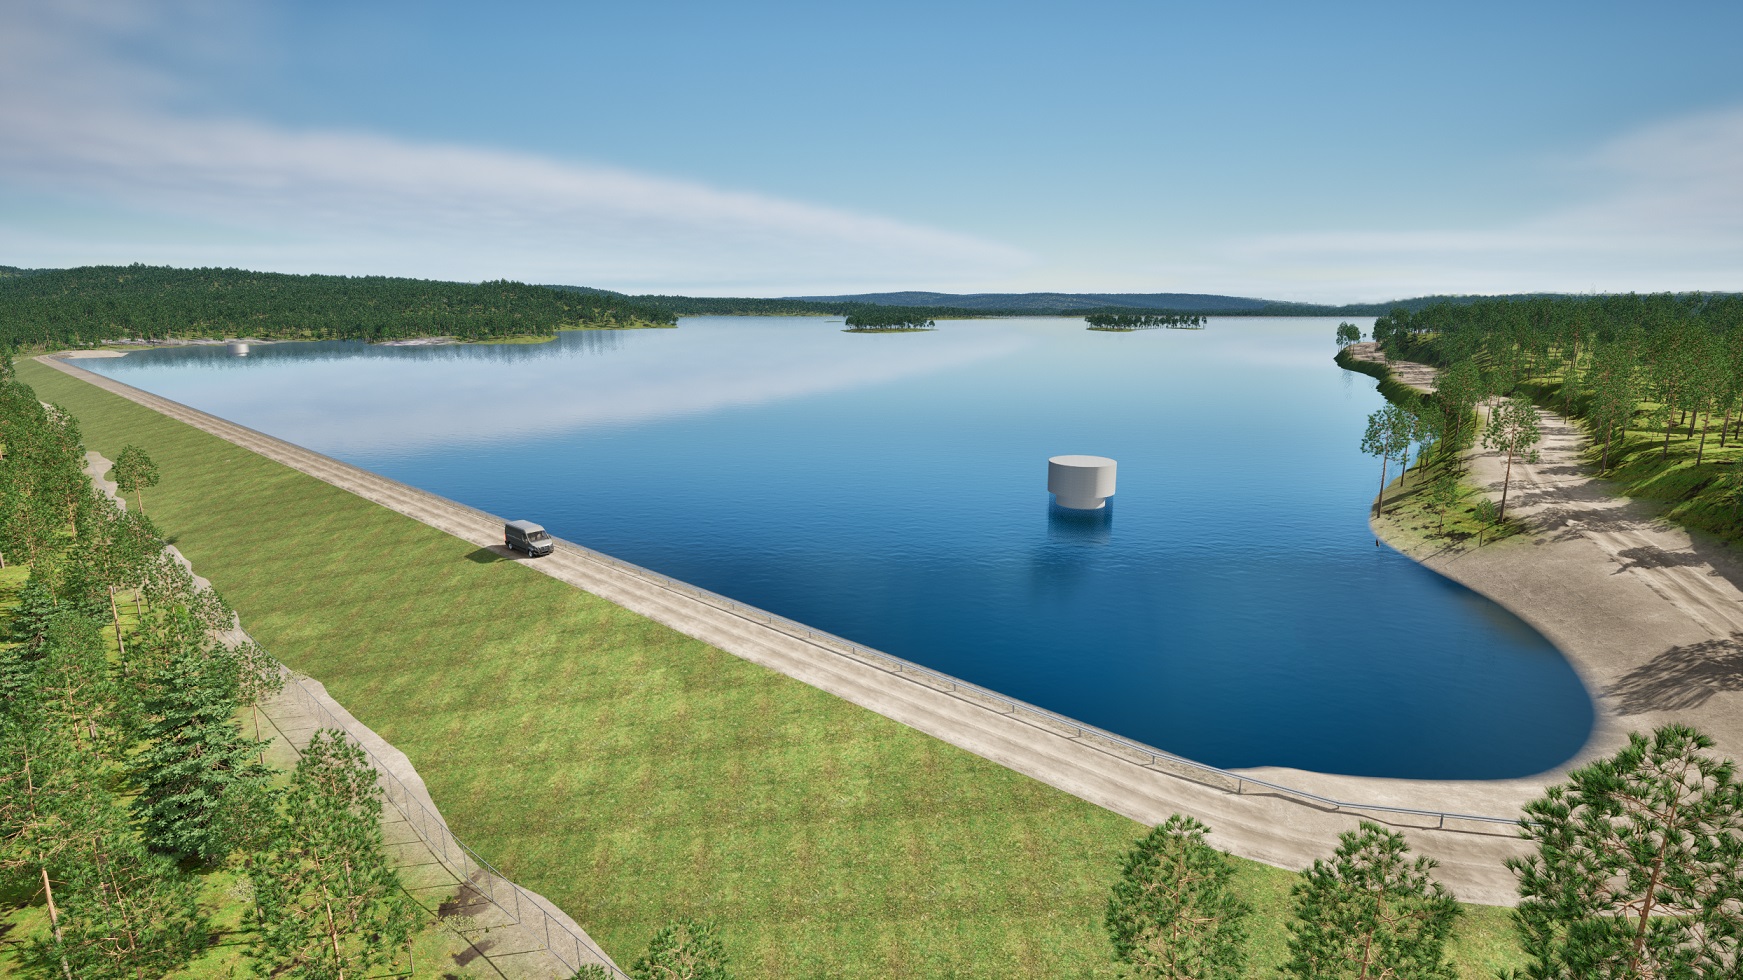 🇫🇮 Suomen Voima Is Launching Energy Storage Project ‘Noste’ in the Kemijärvi Region